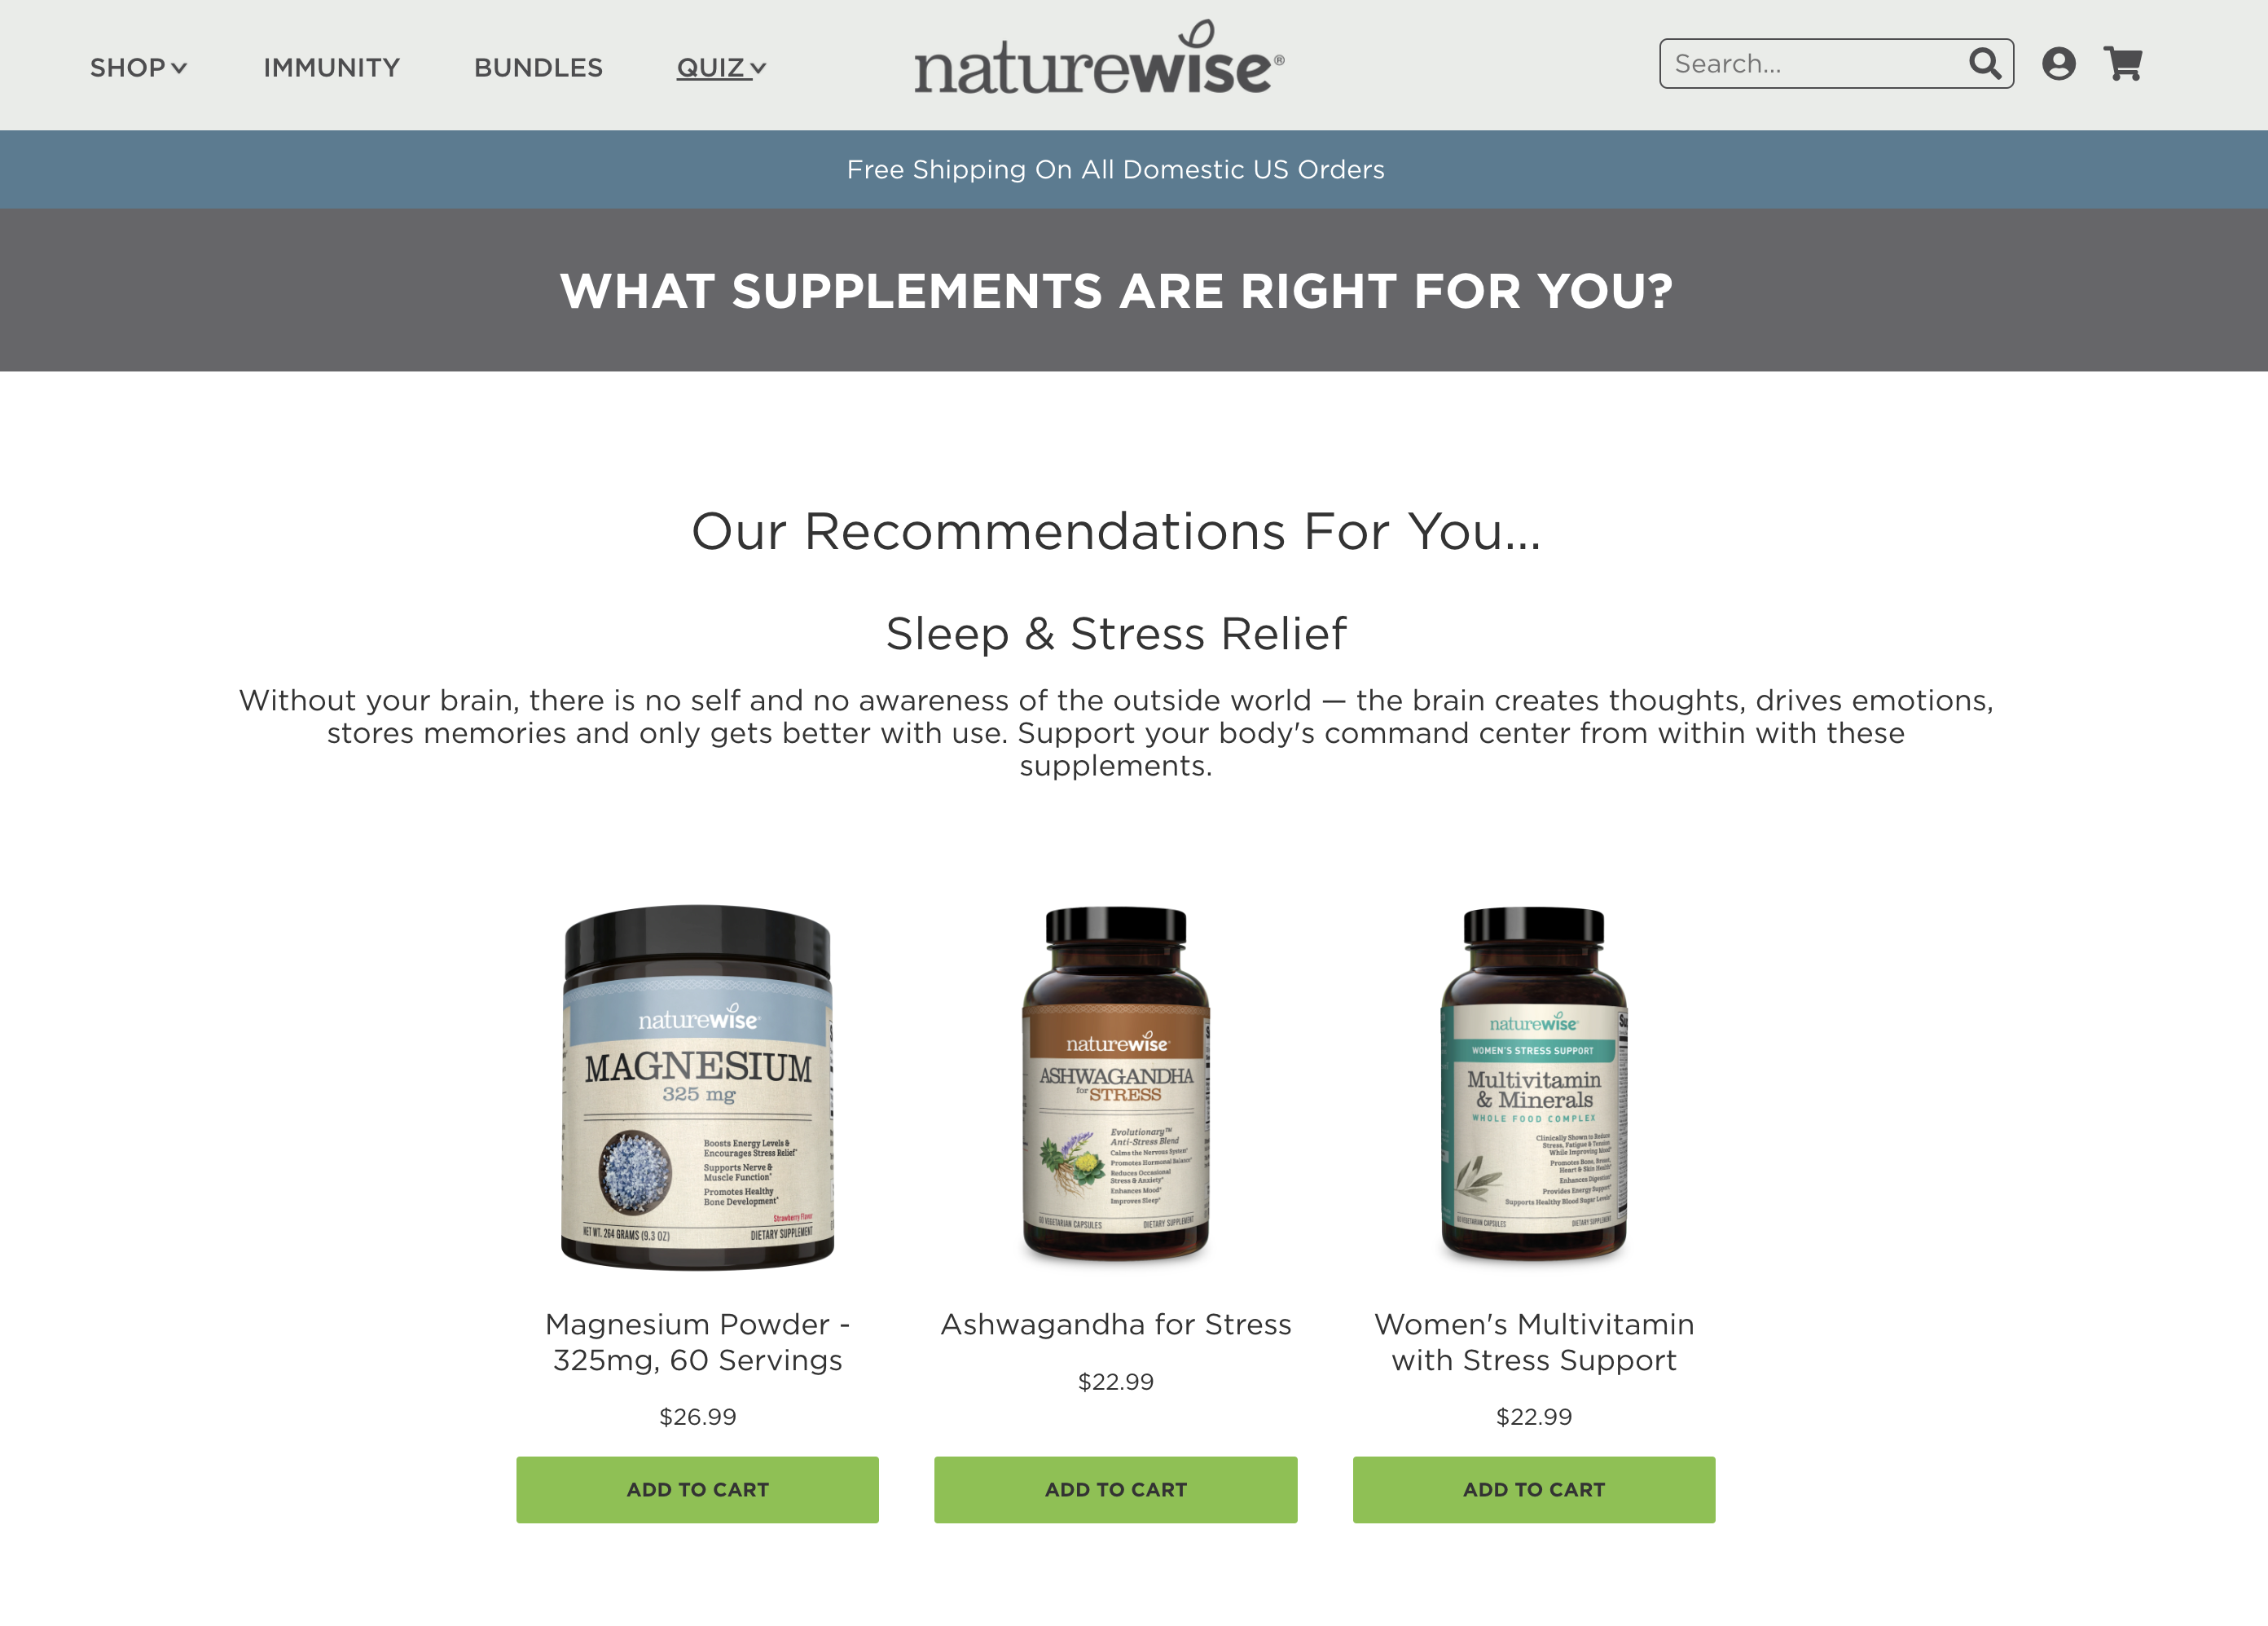 NatureWise product recommendation quiz example